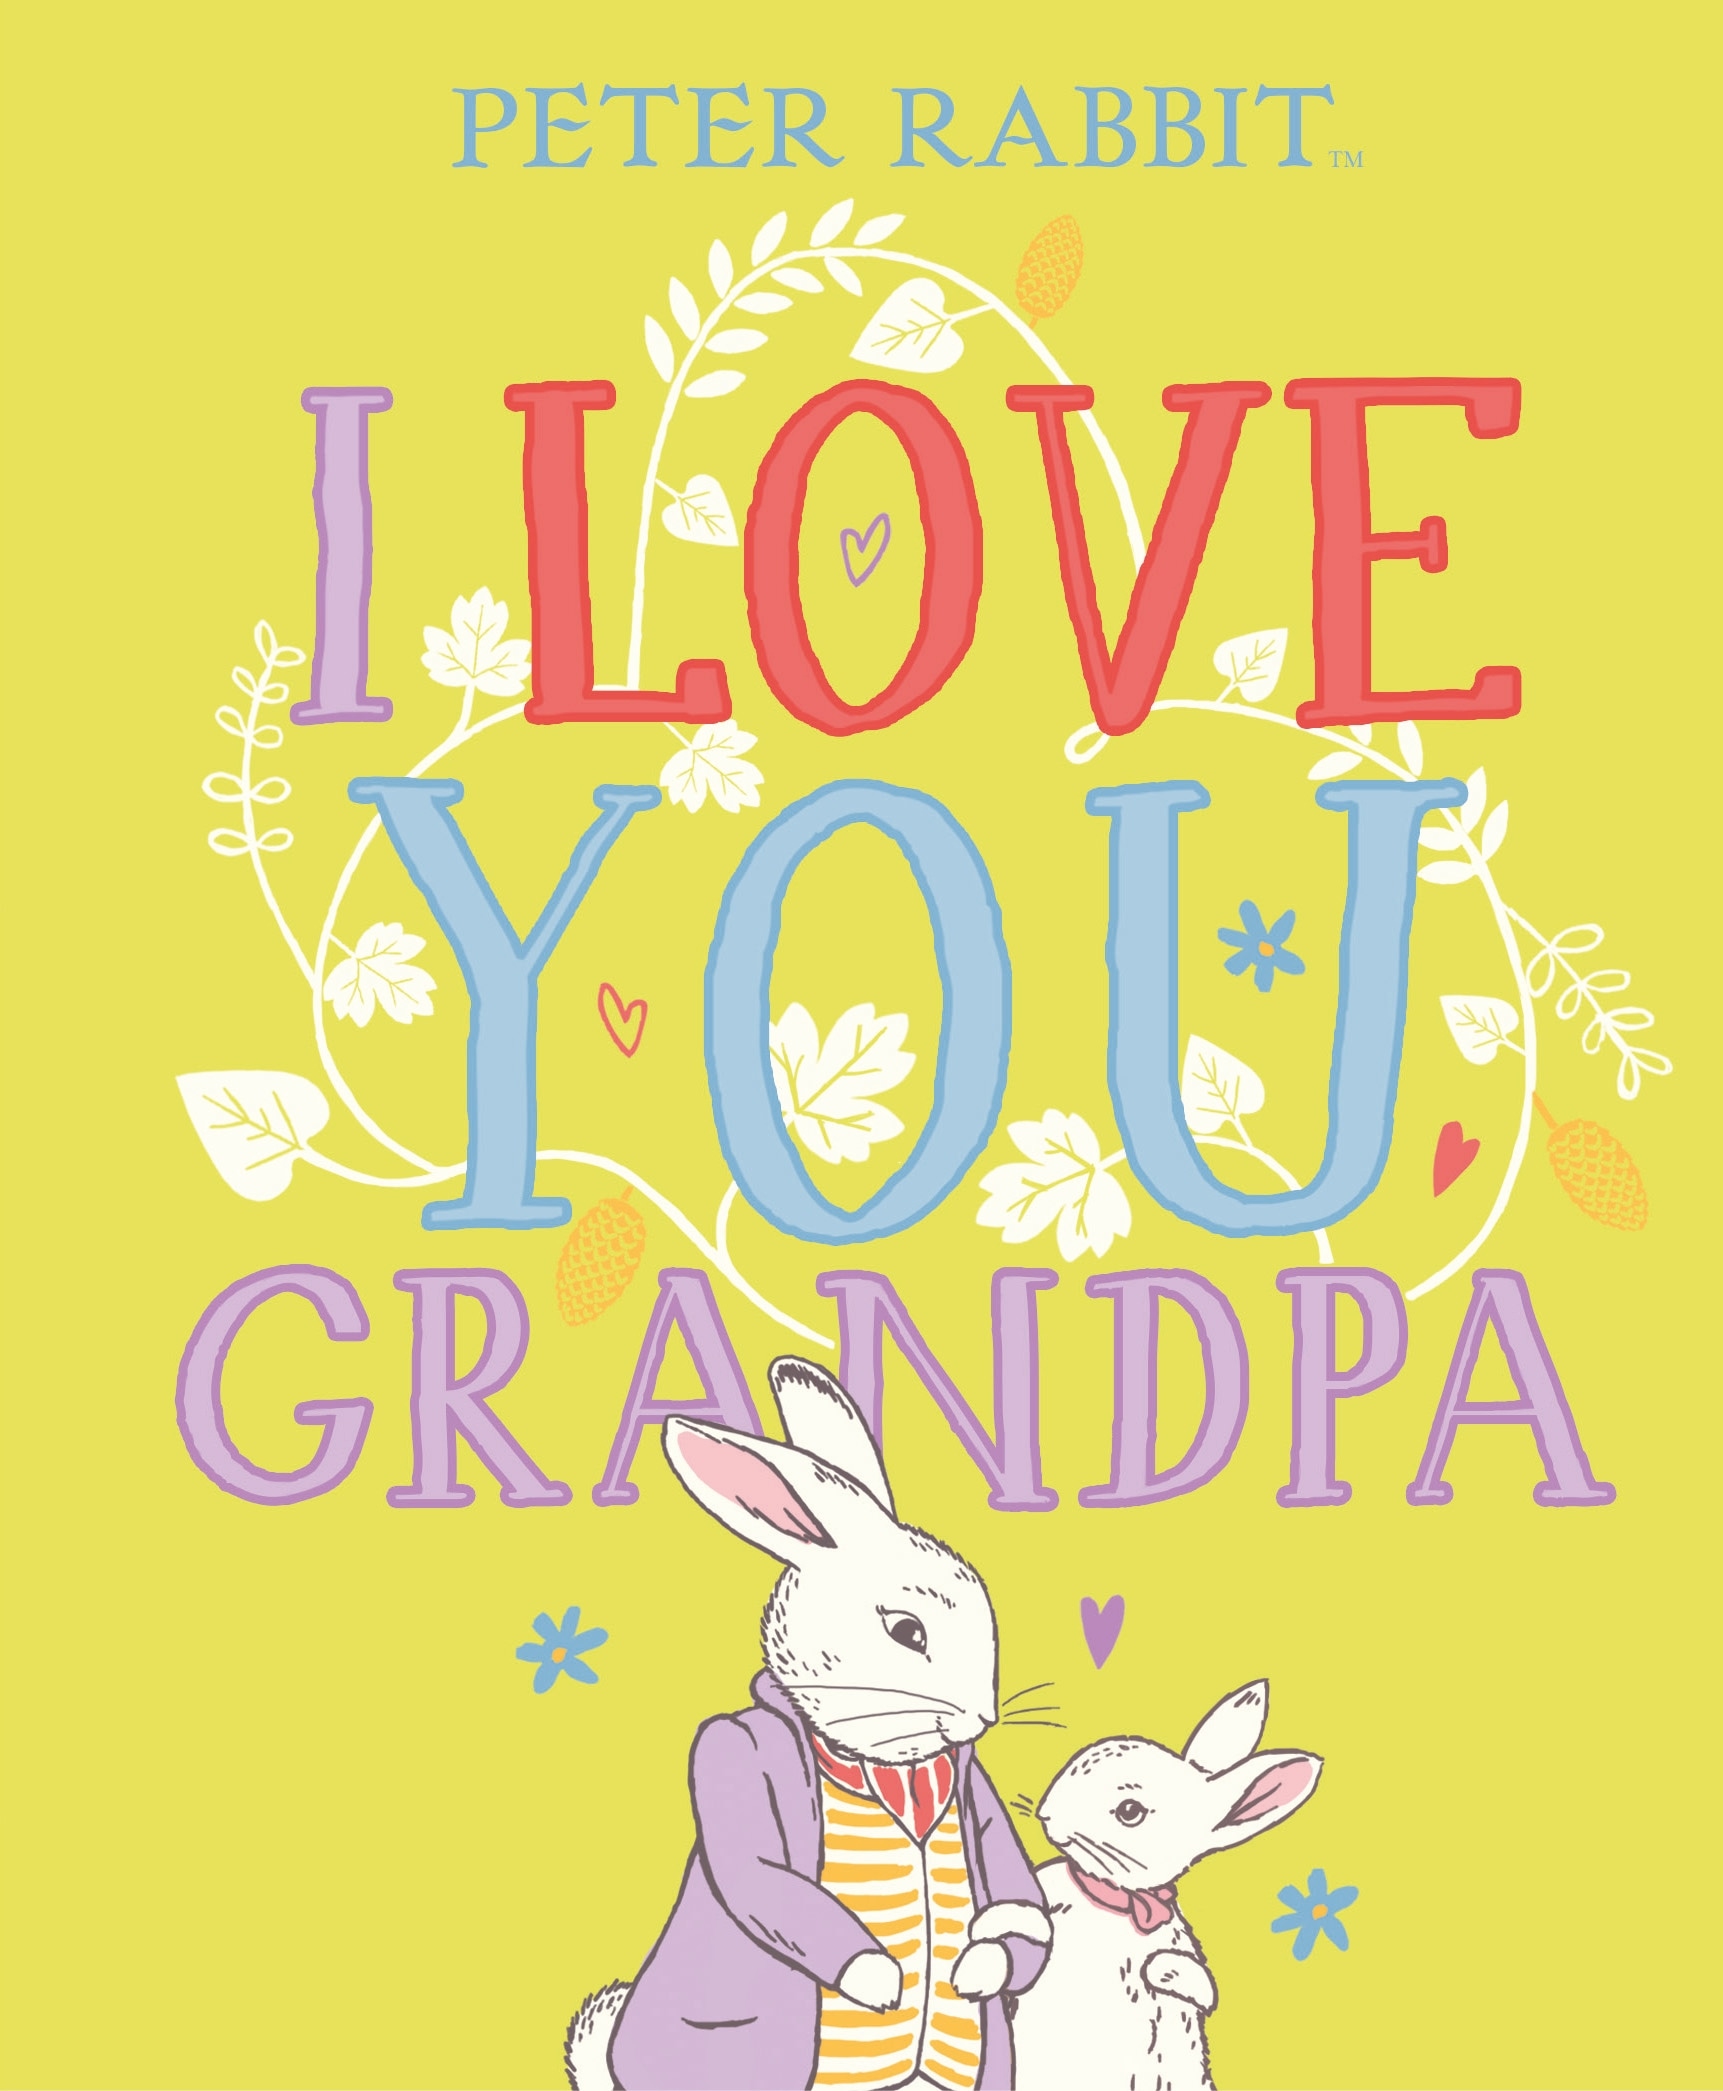 Book “Peter Rabbit I Love You Grandpa” by Beatrix Potter — February 3, 2022